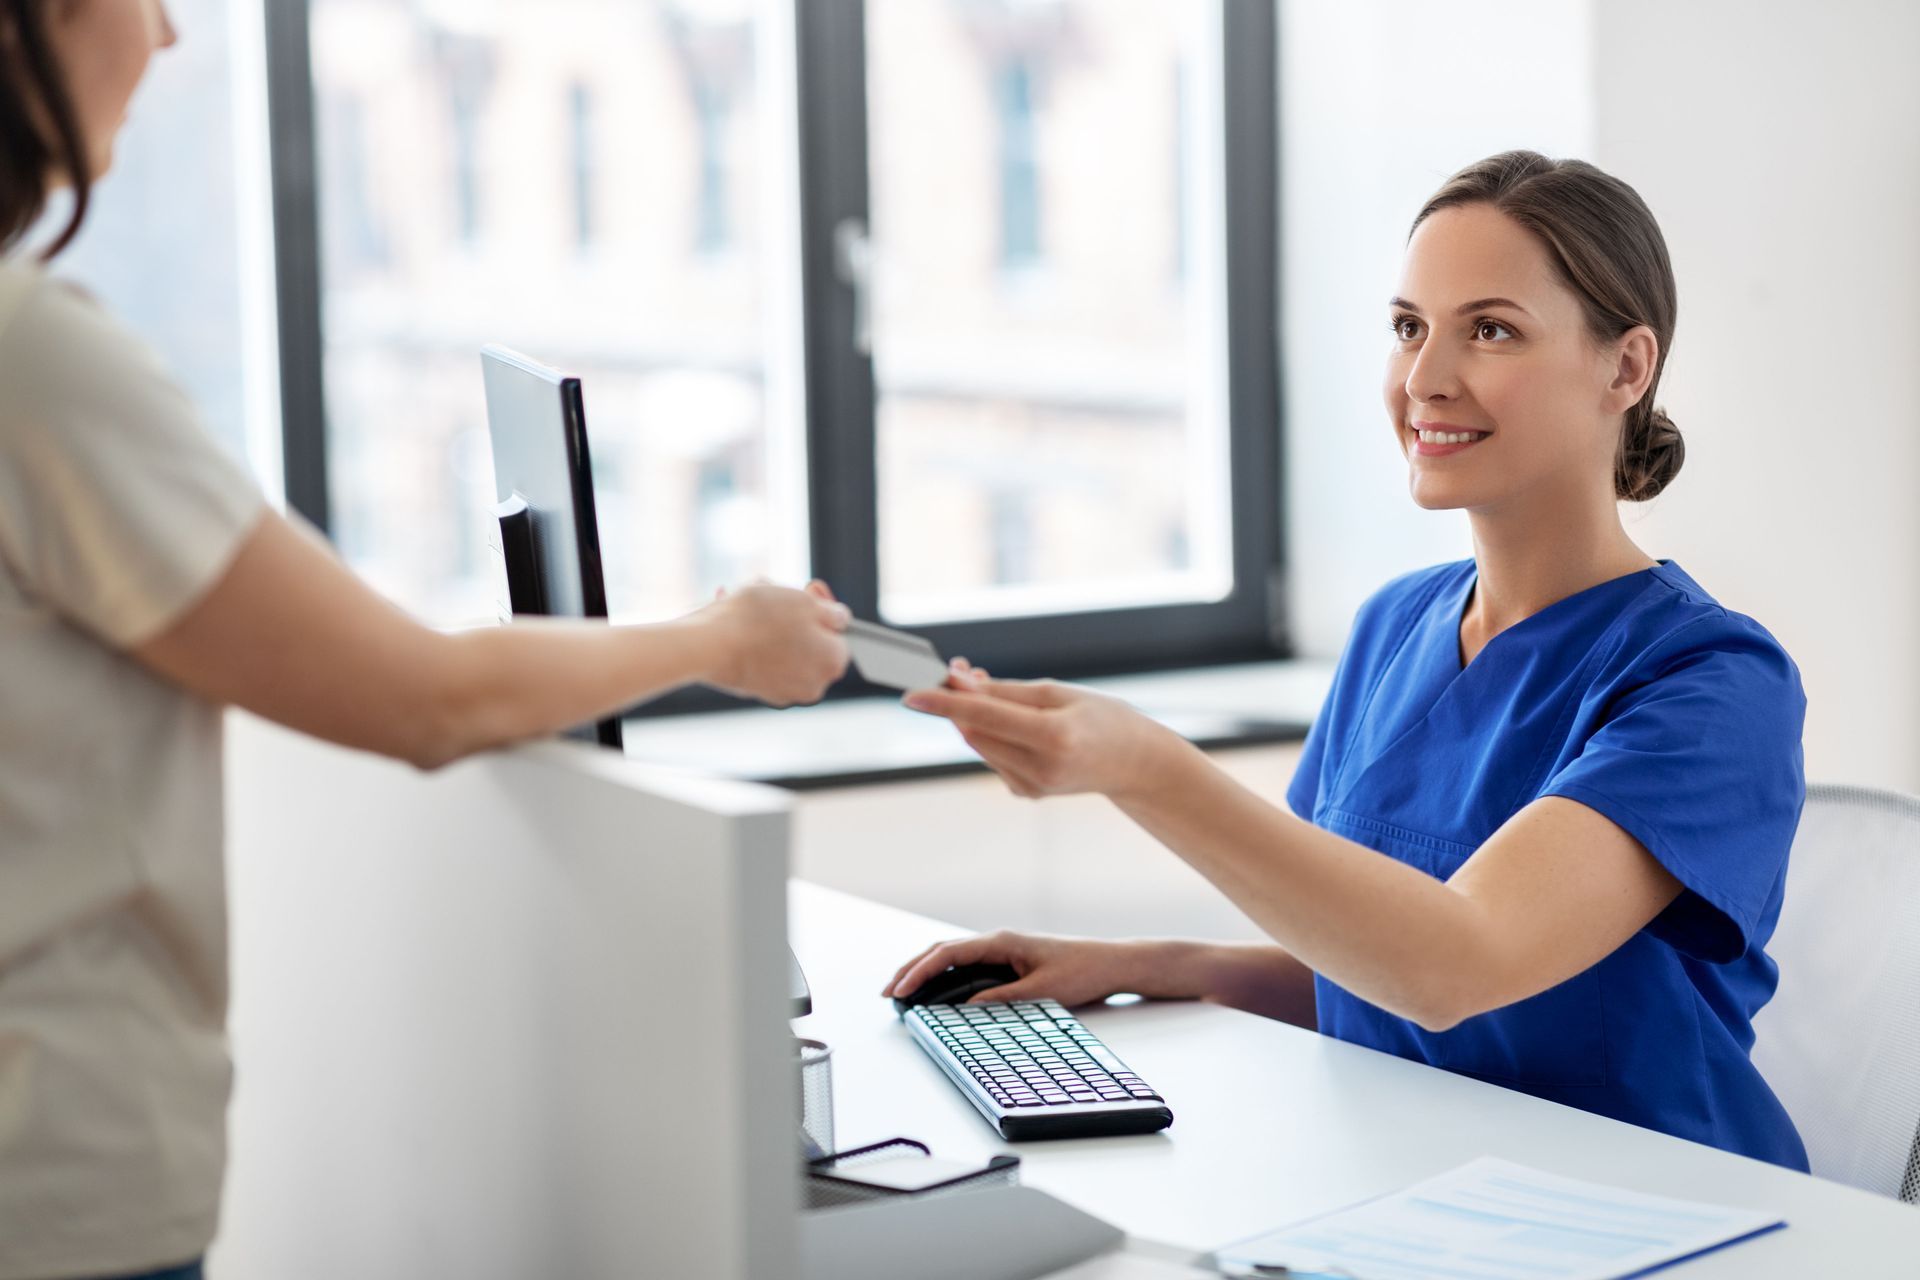 A nurse is giving a patient a card at a reception desk.